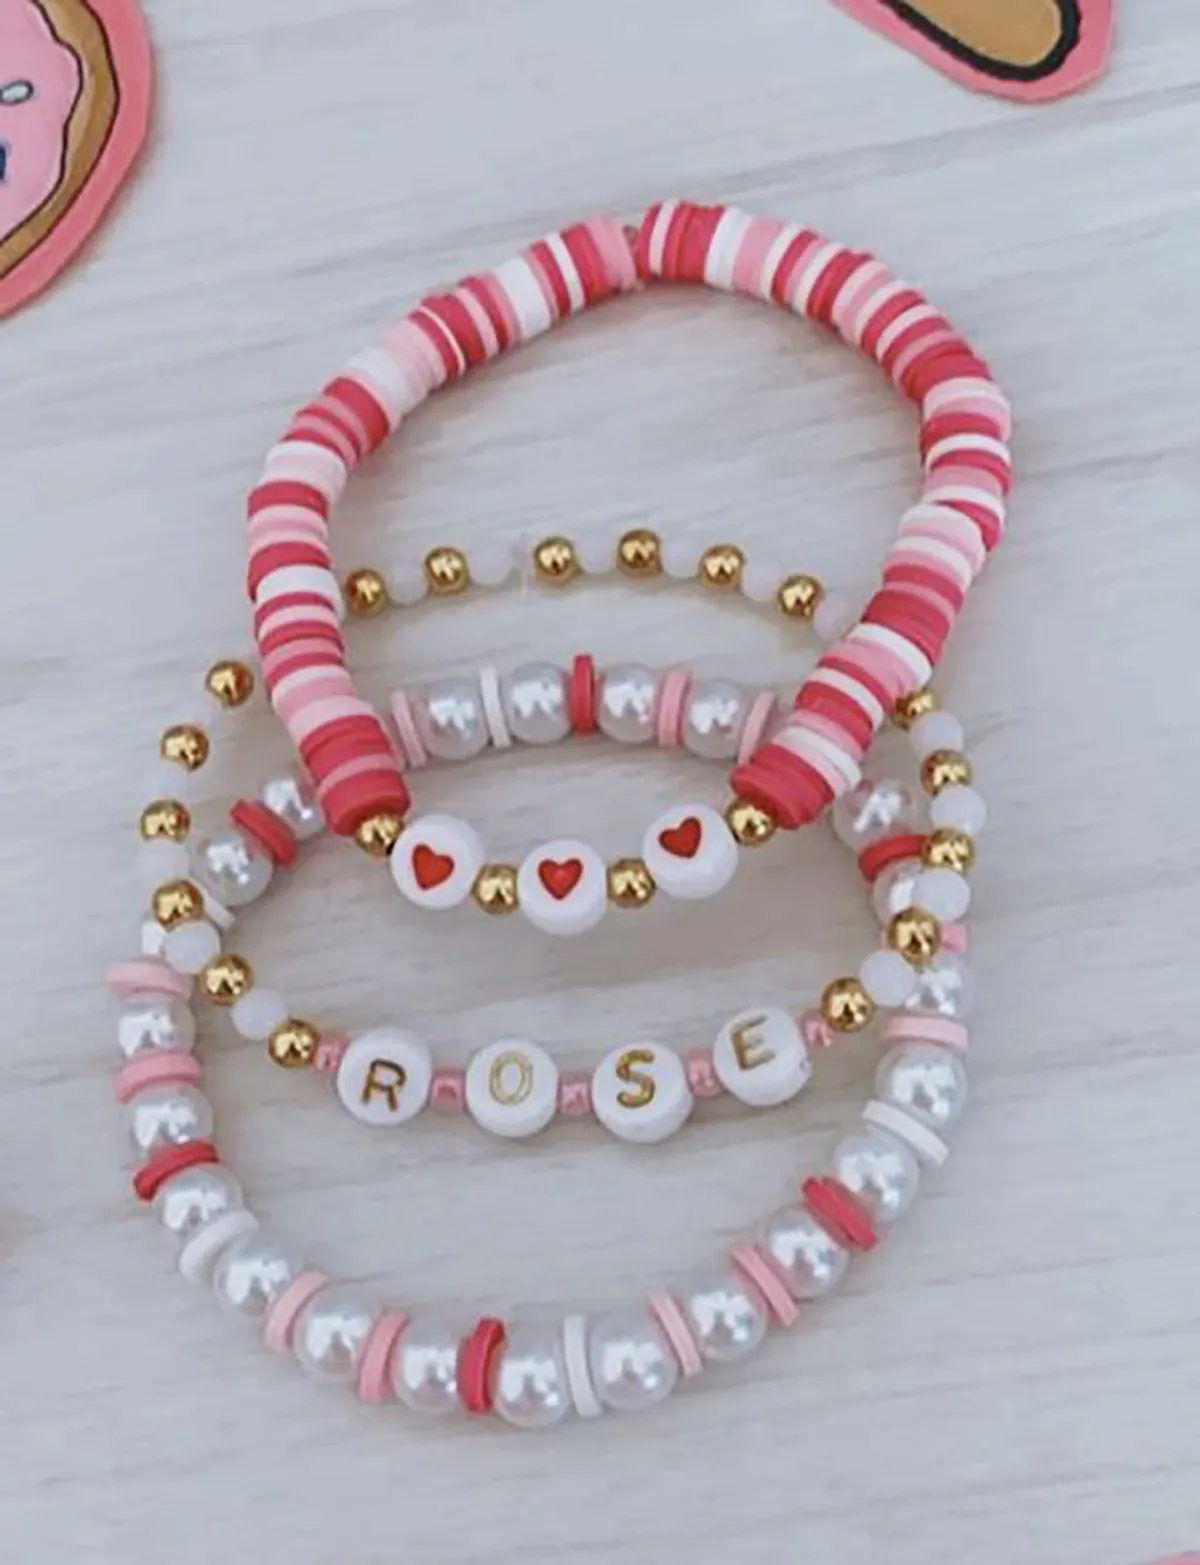 clay bead bracelet kits - letters